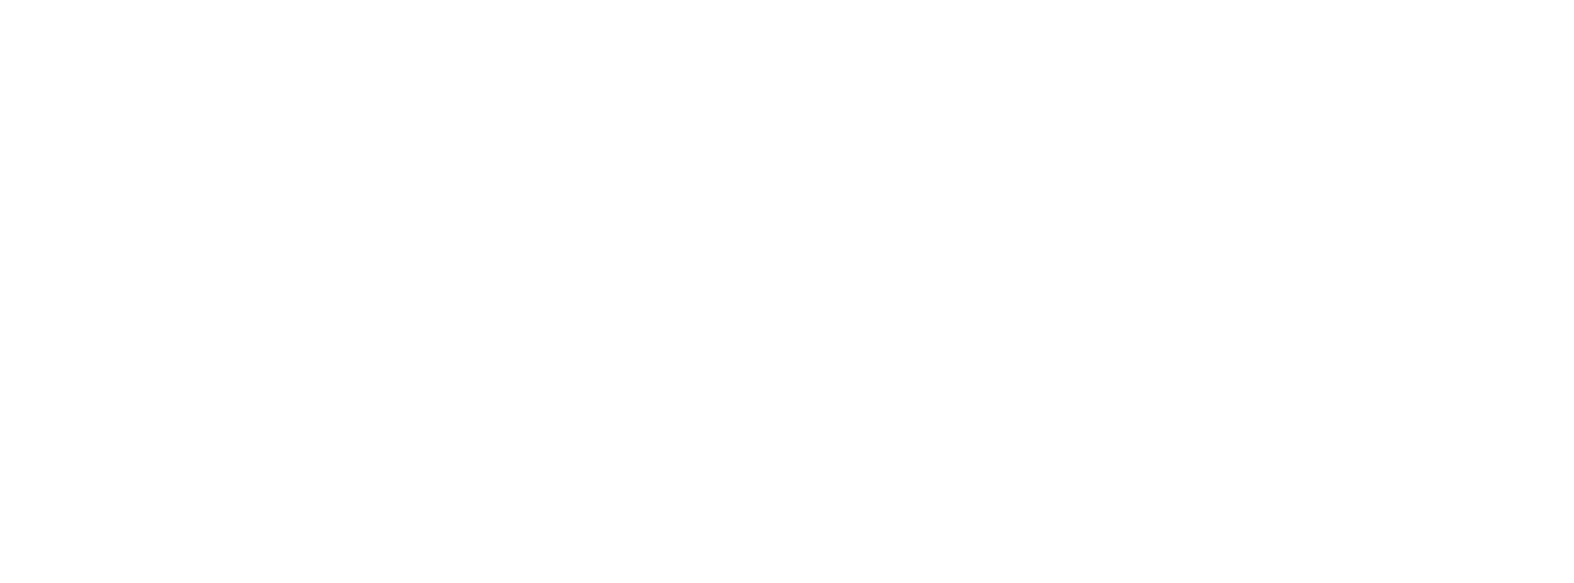 AGCO logo grand pour les fonds sombres (PNG transparent)